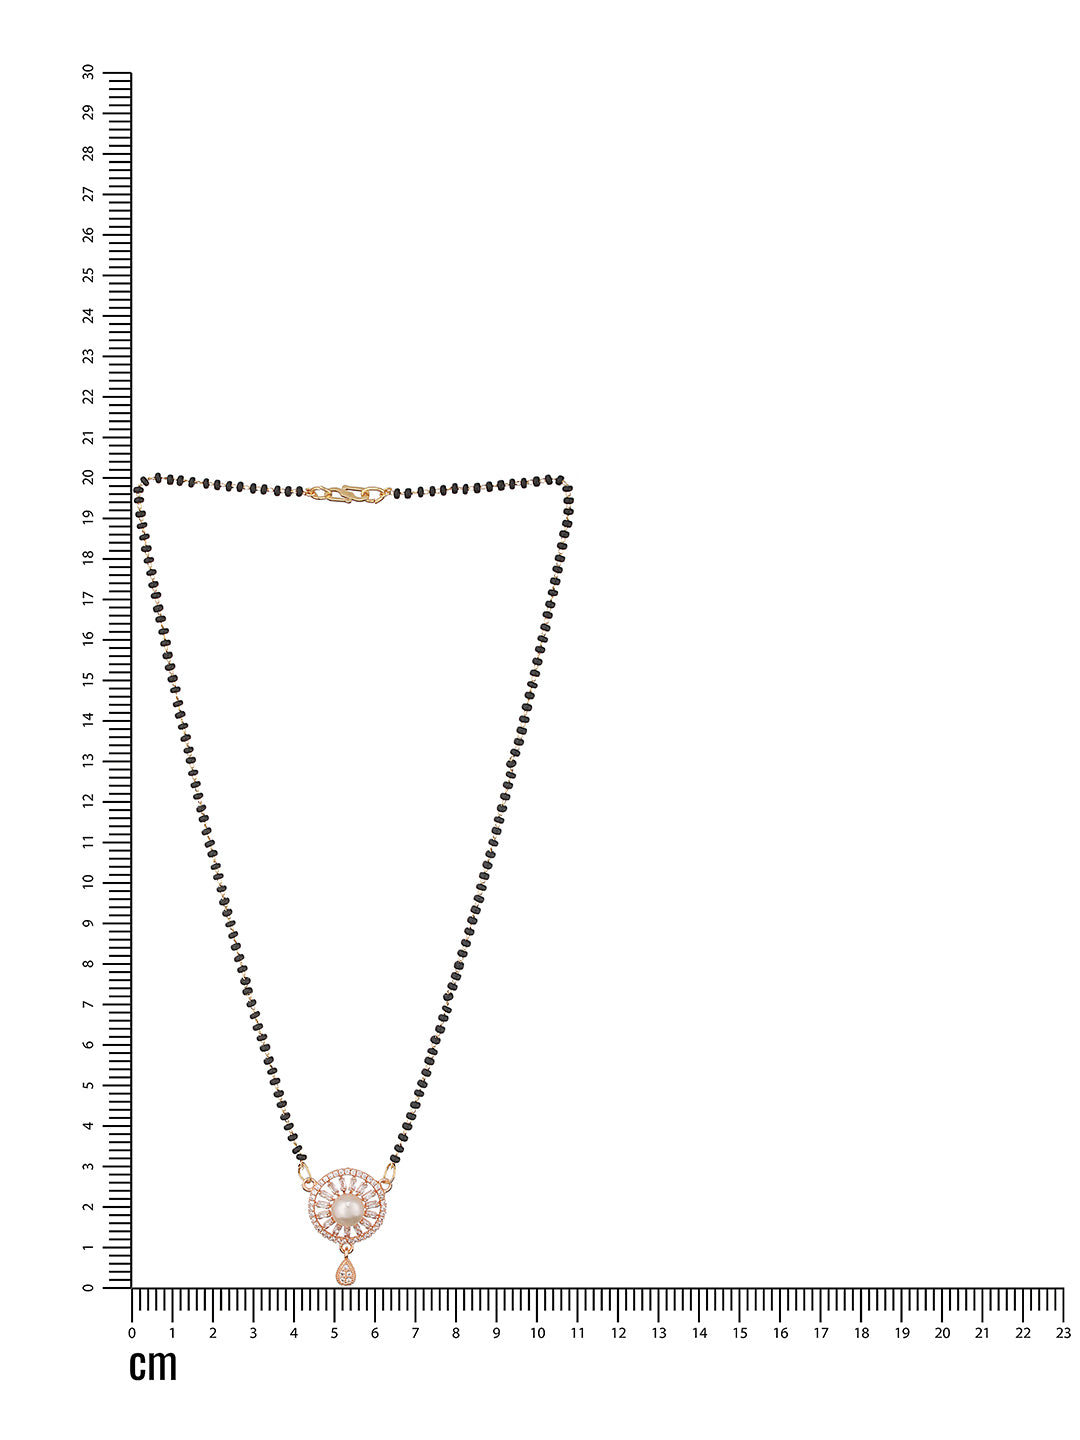 Rose Gold Plated American Diamond Studded & Pearl Embellished Mangalsutra - Jazzandsizzle